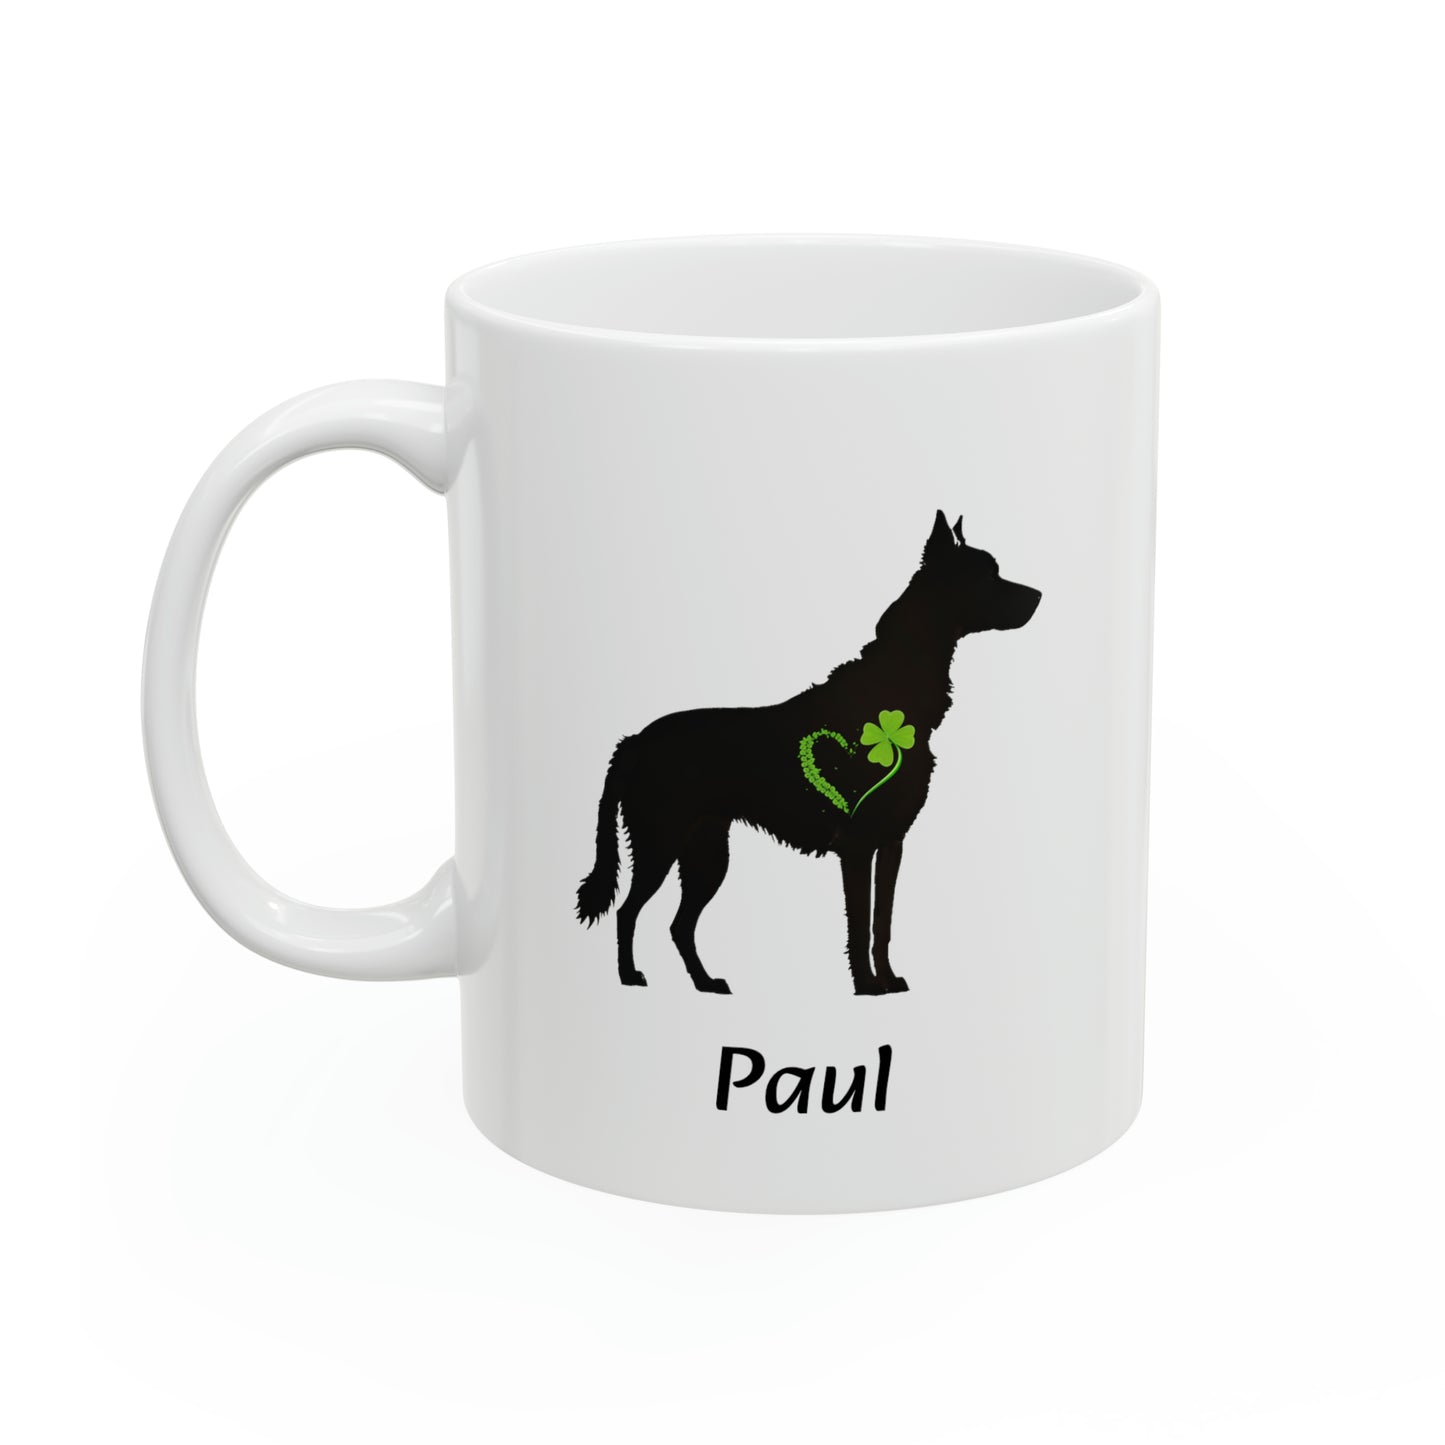 Dog & Cat Mug with Clover for St. Patrick's Day, (Custom Name Option)